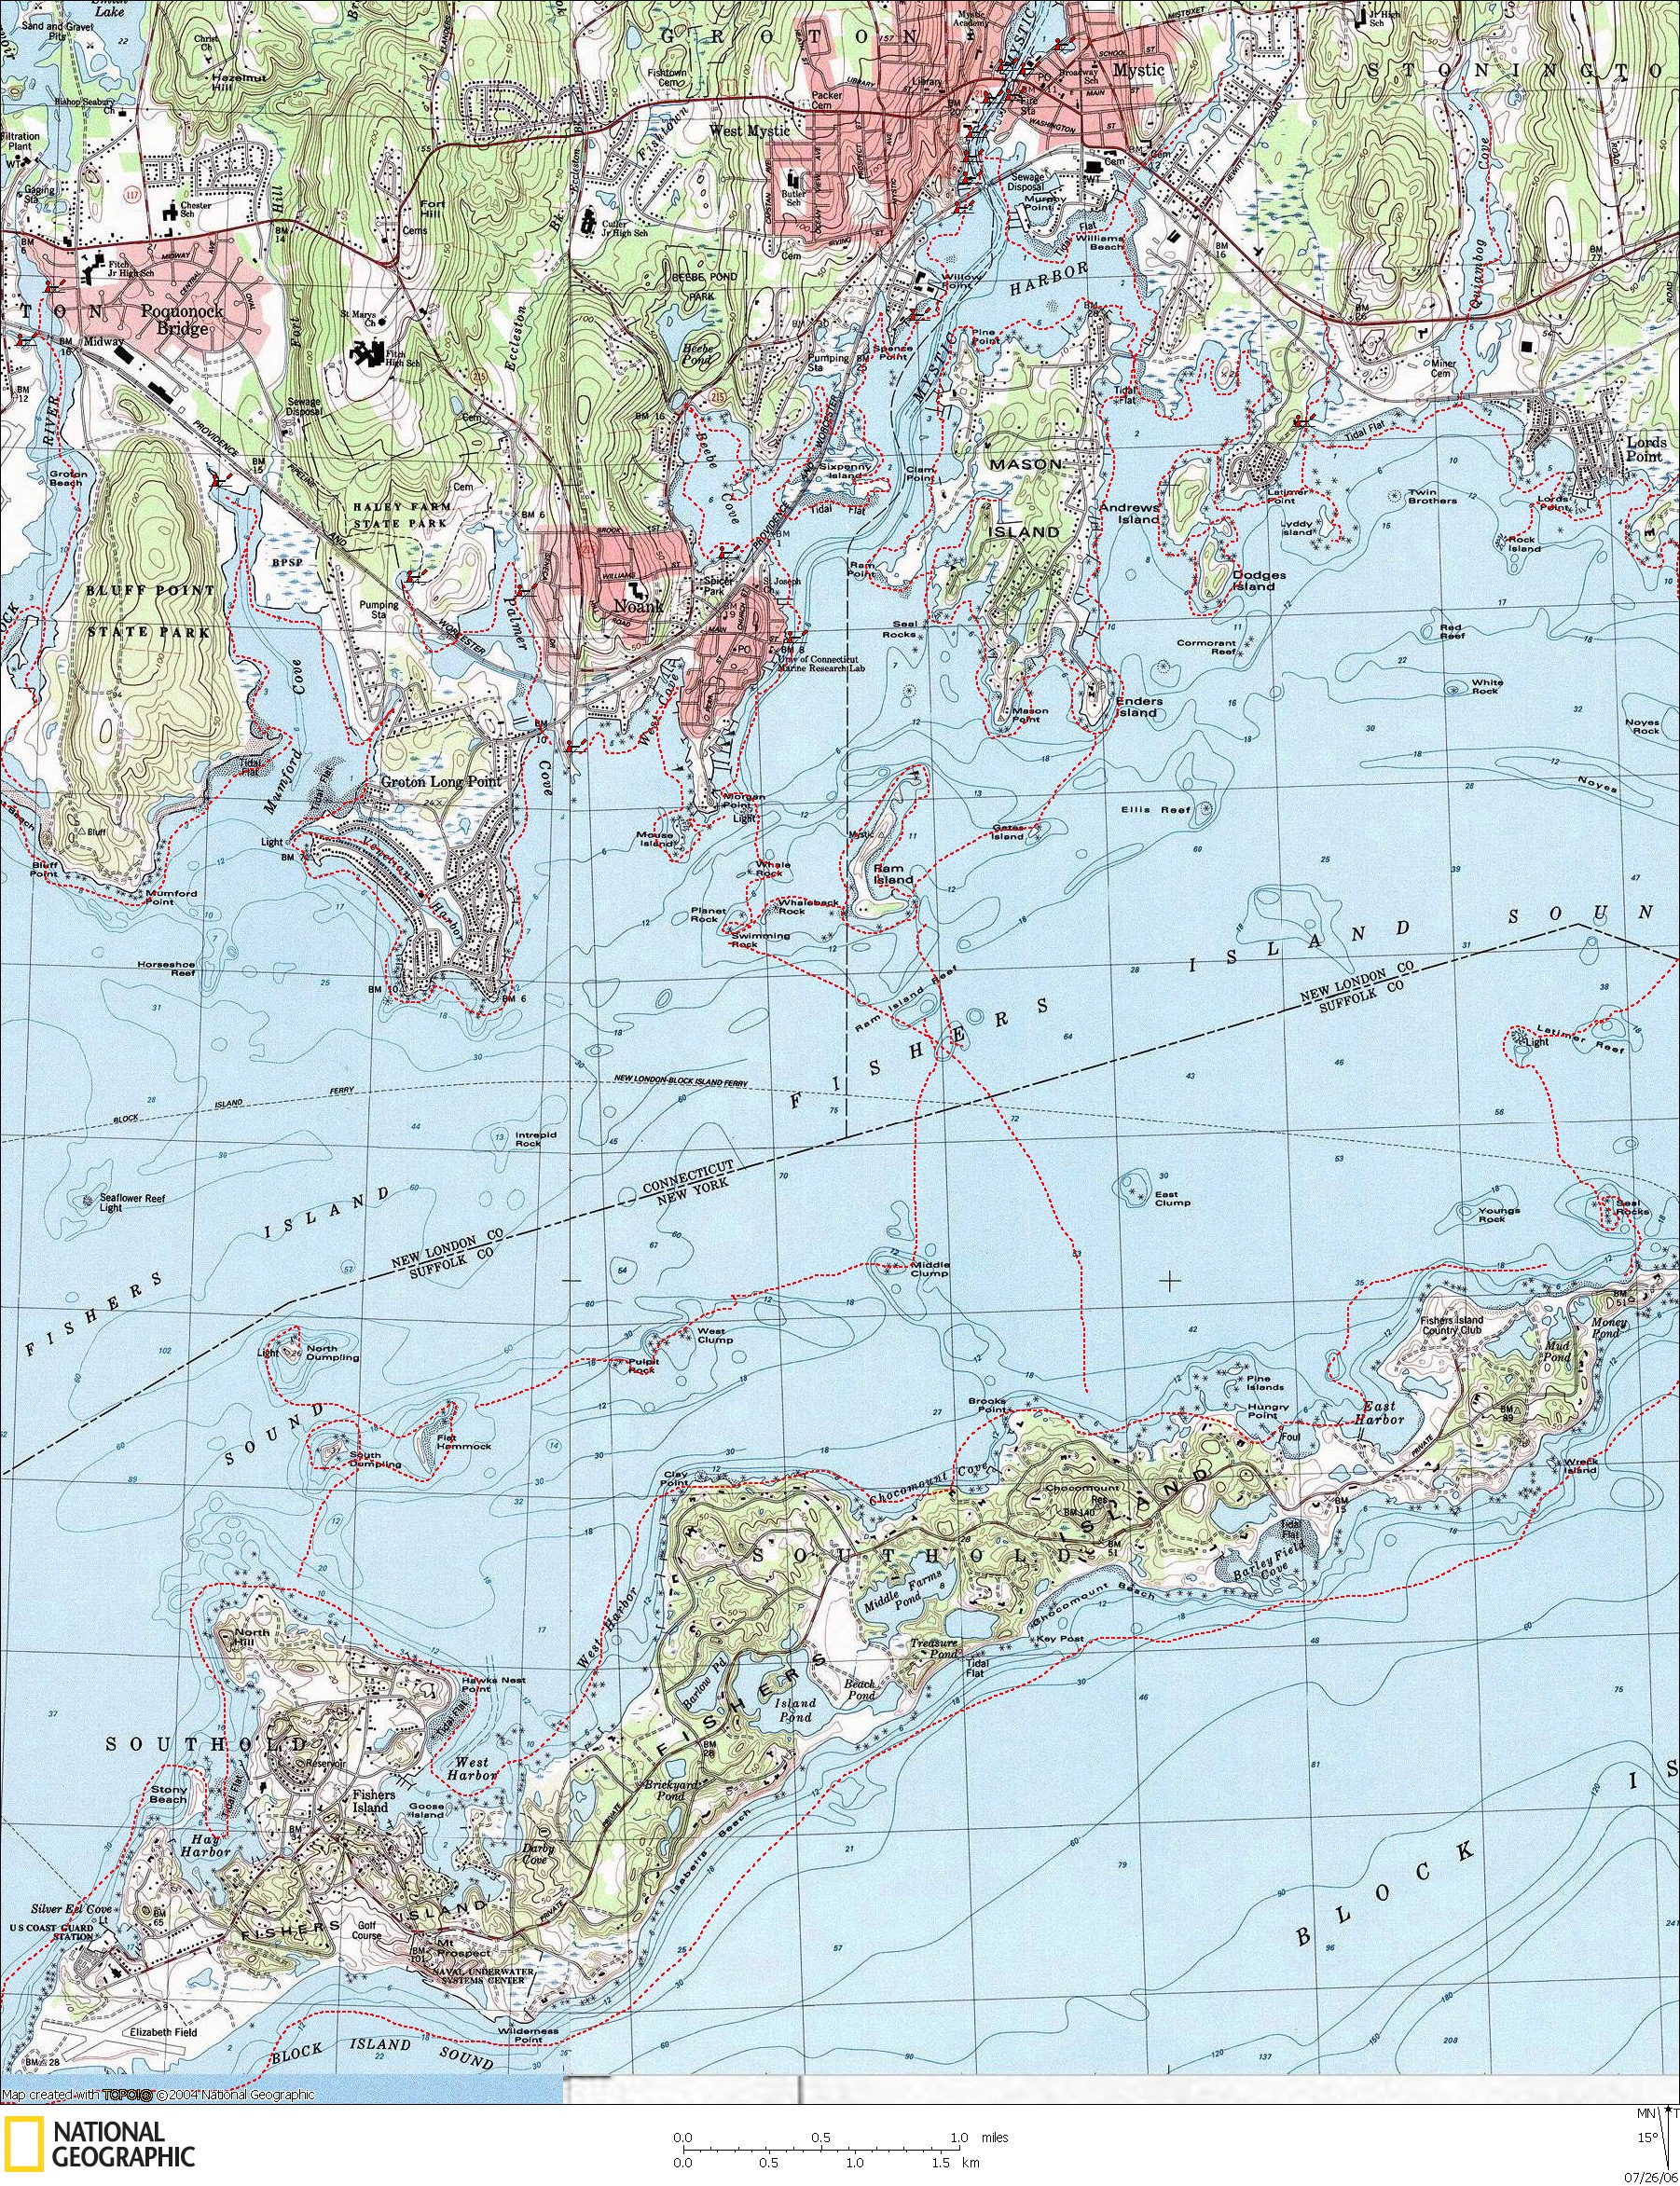 Connecticut, Sea, kayaking, Map, coastal, Long Island Sound, Fisher's Island